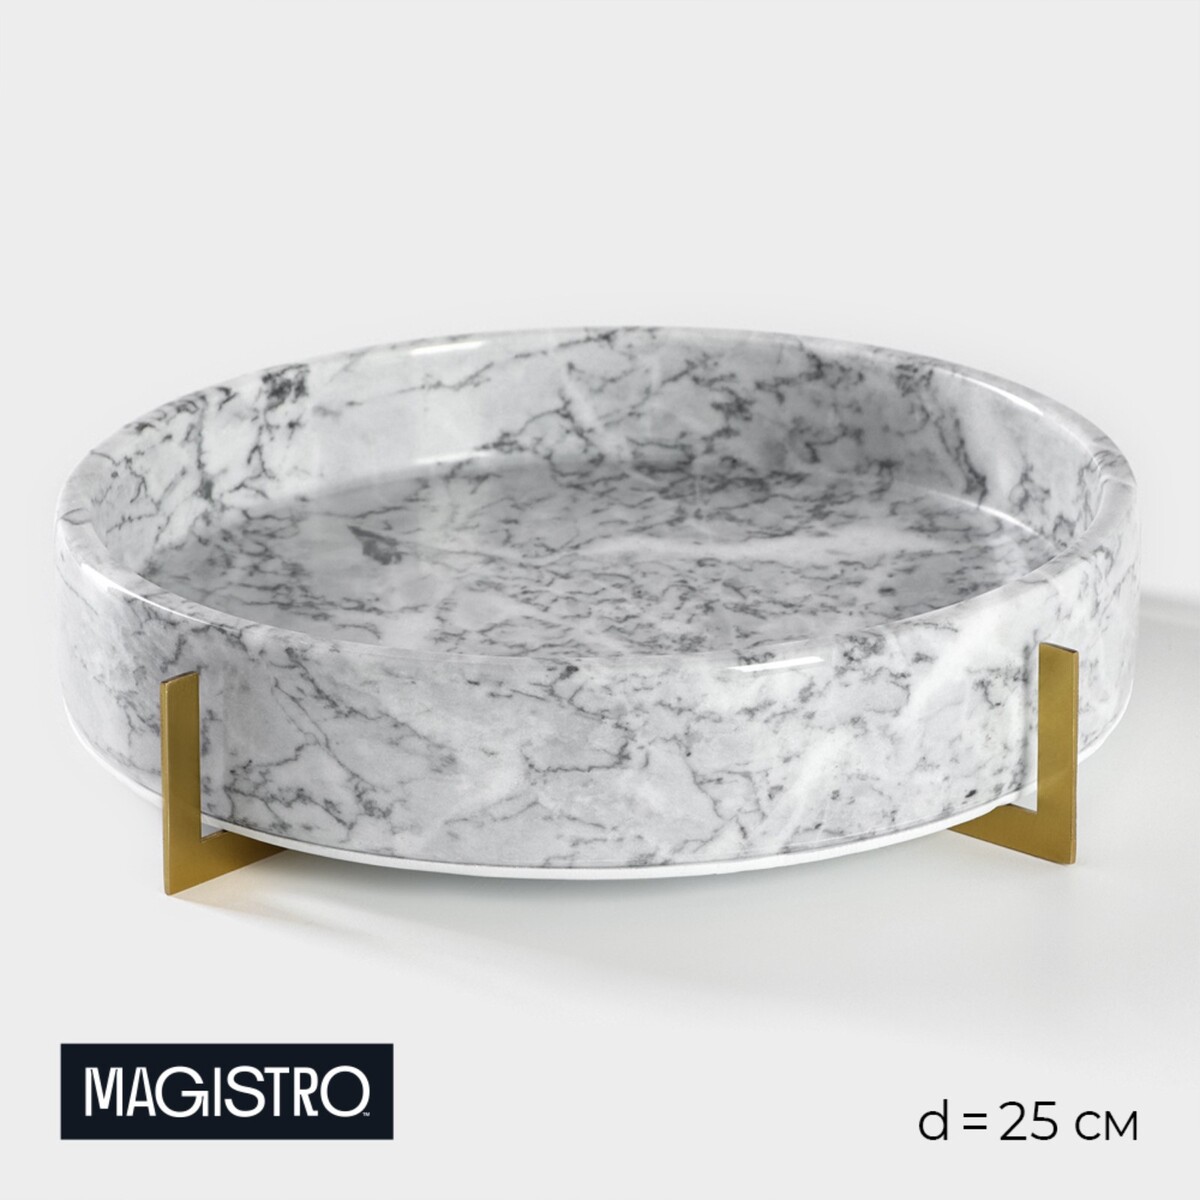    magistro marble, d=25 